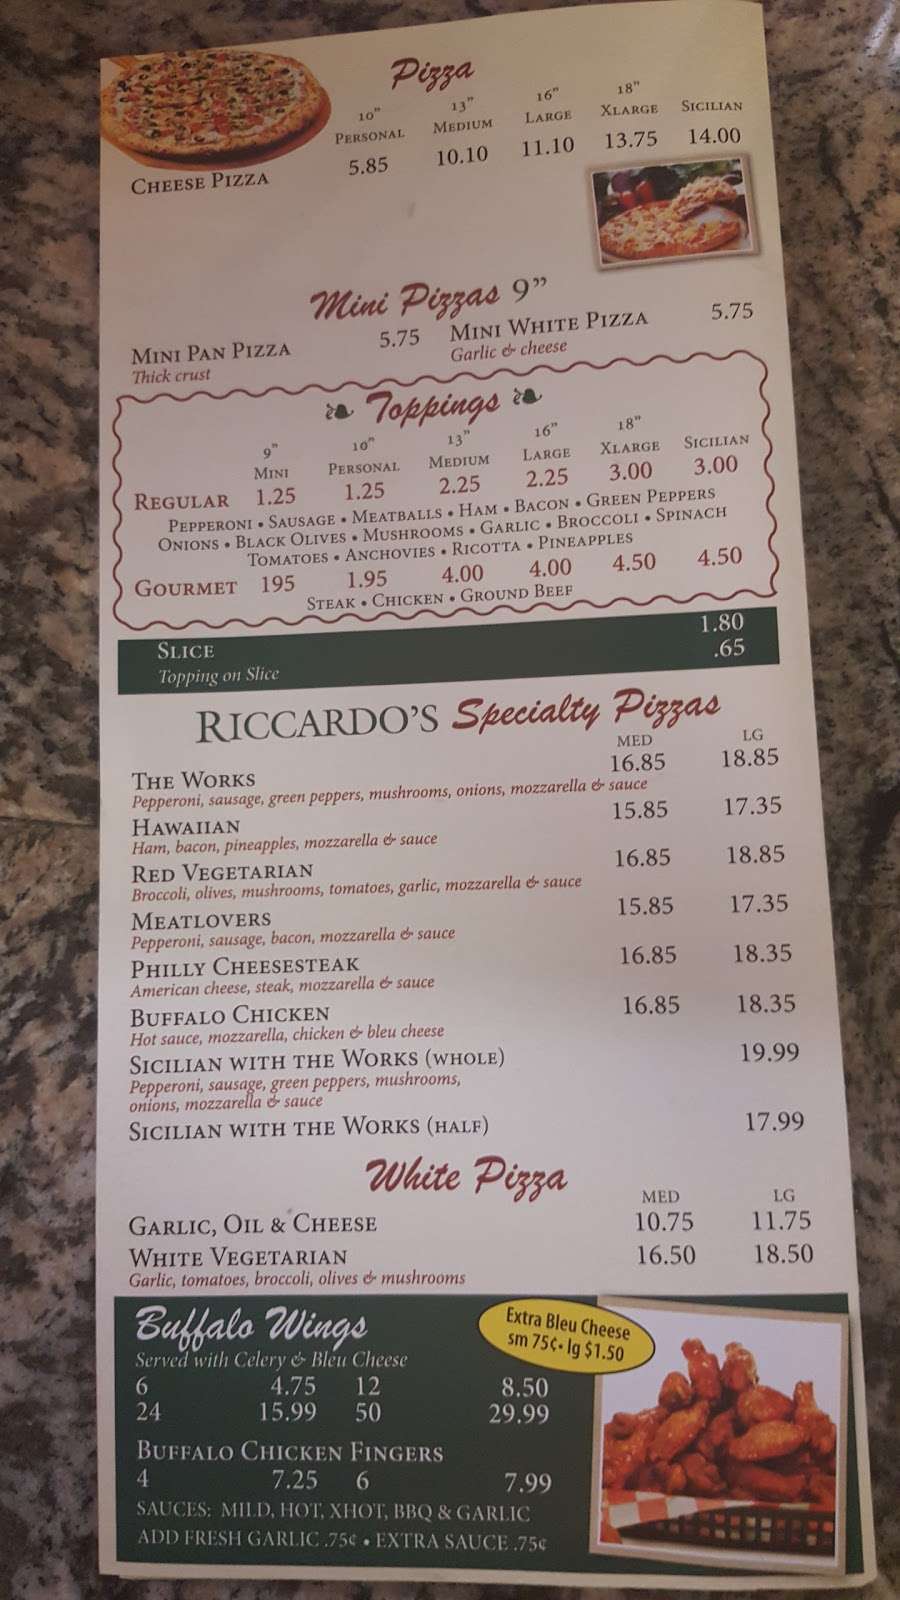 Riccardos Pizza & Restaurant | 240 John F Kennedy Way, Willingboro, NJ 08046, USA | Phone: (609) 871-3330